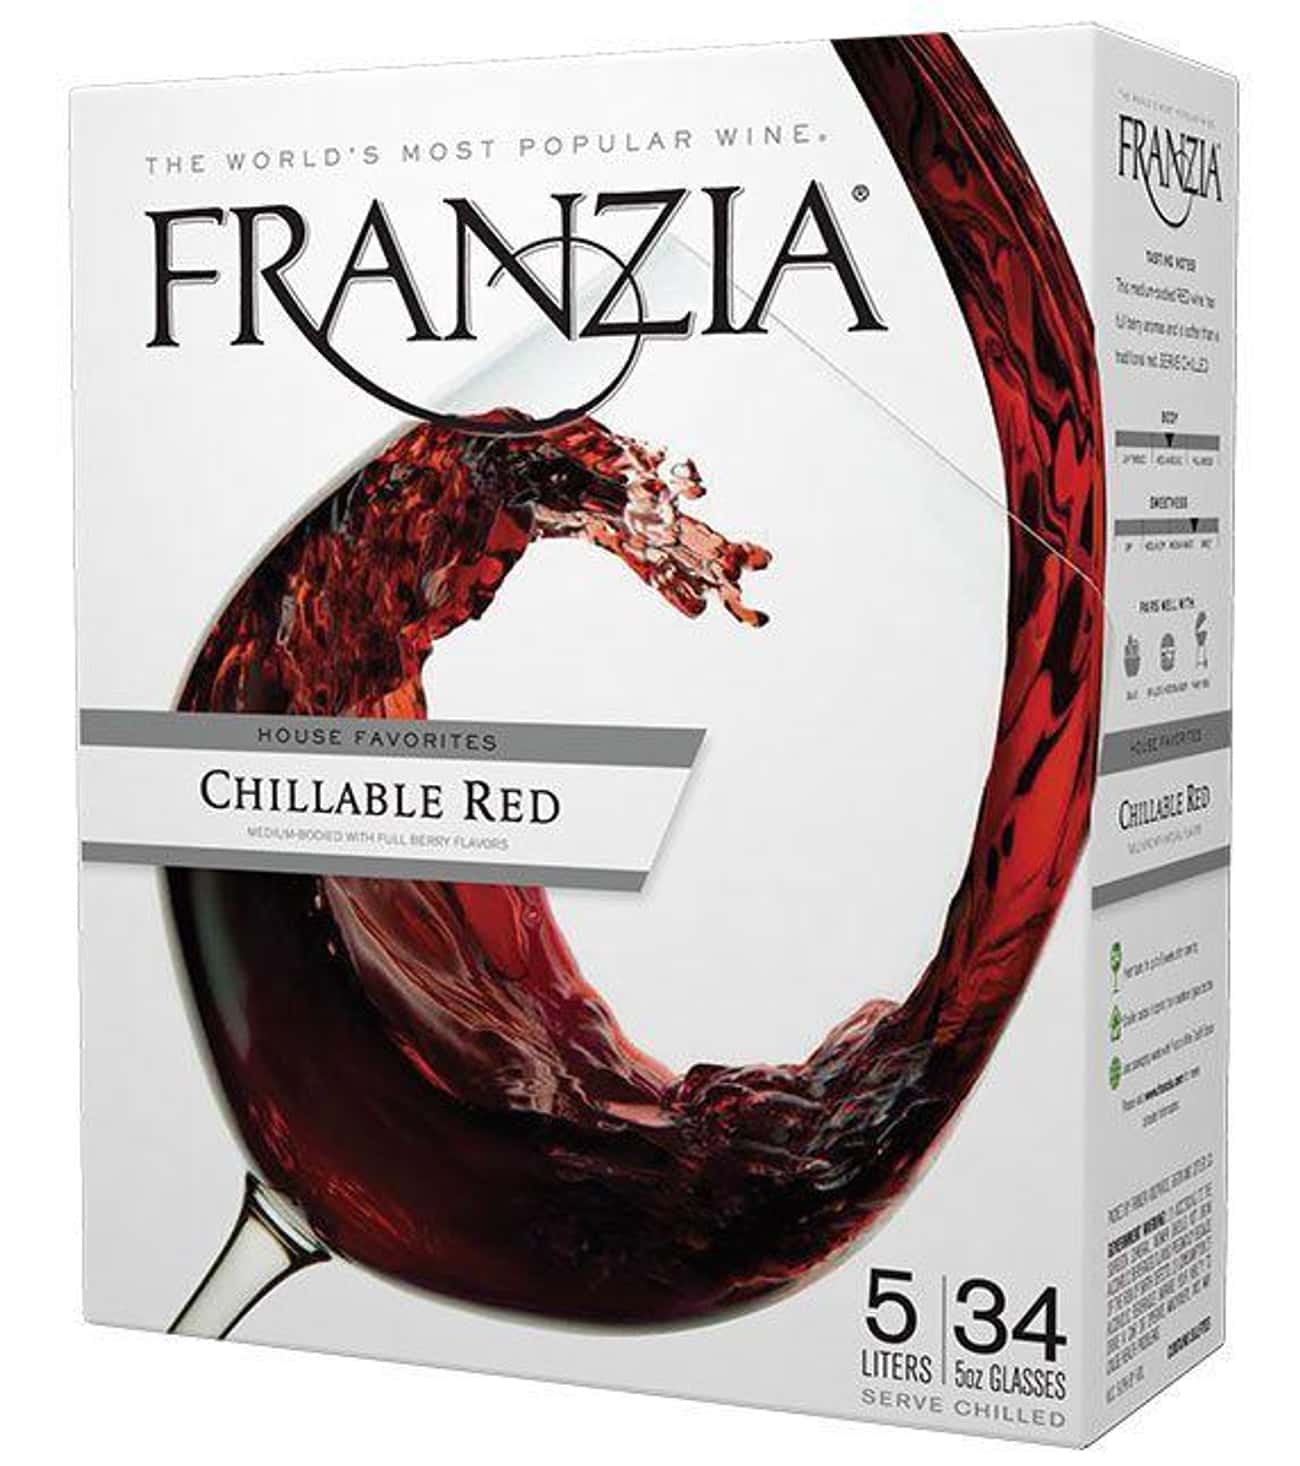 franzia-boxed-wine-pinot-grigio-reviews-2020